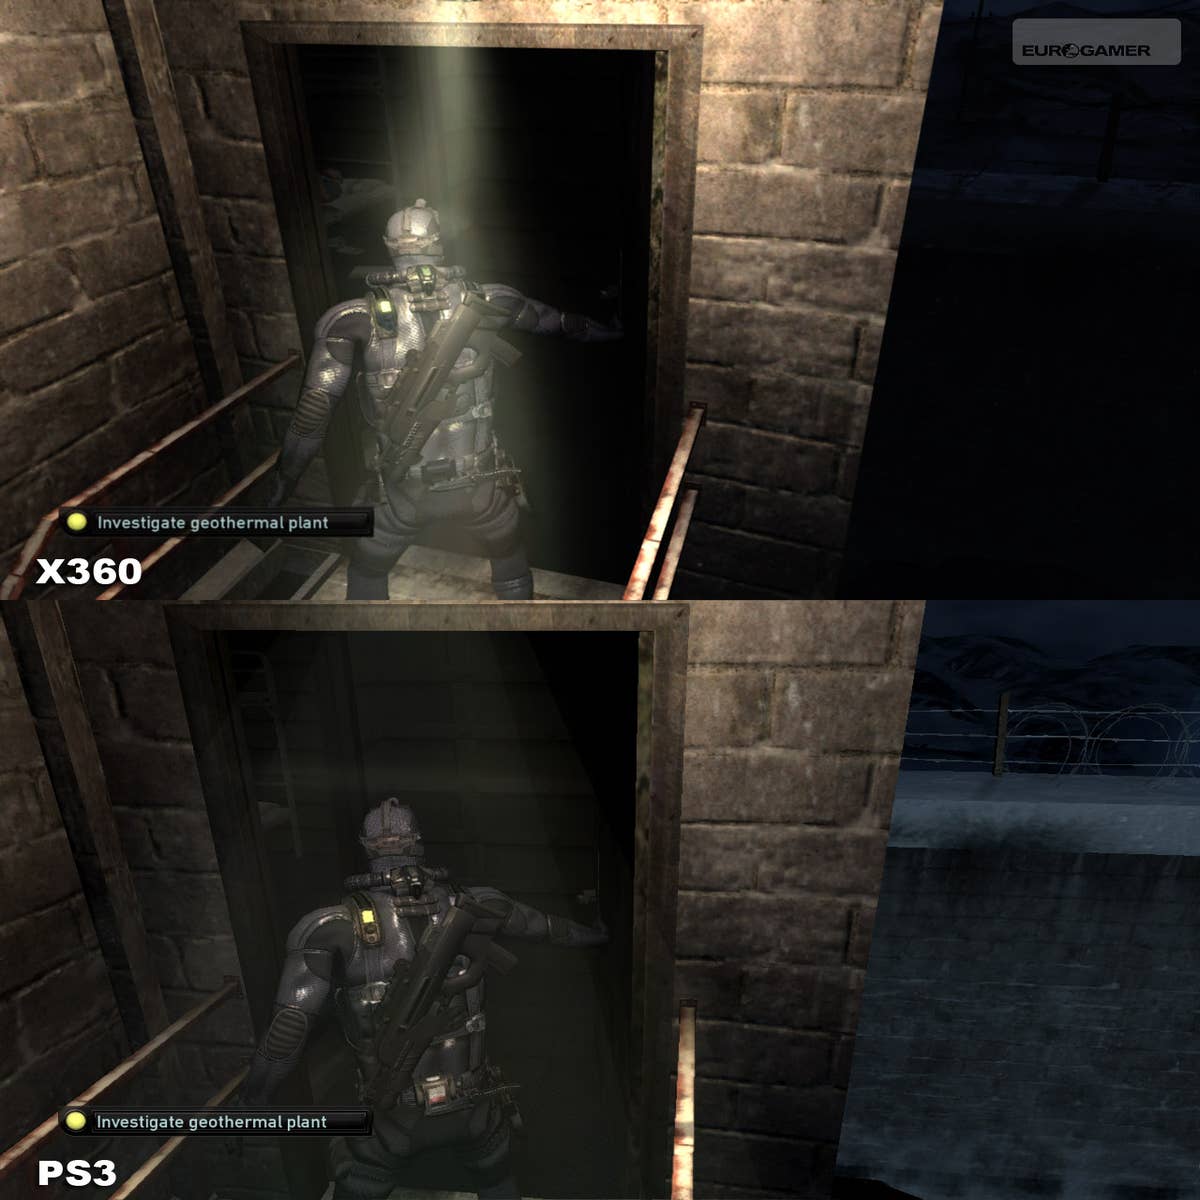 Splinter Cell: Double Agent Original Xbox Used